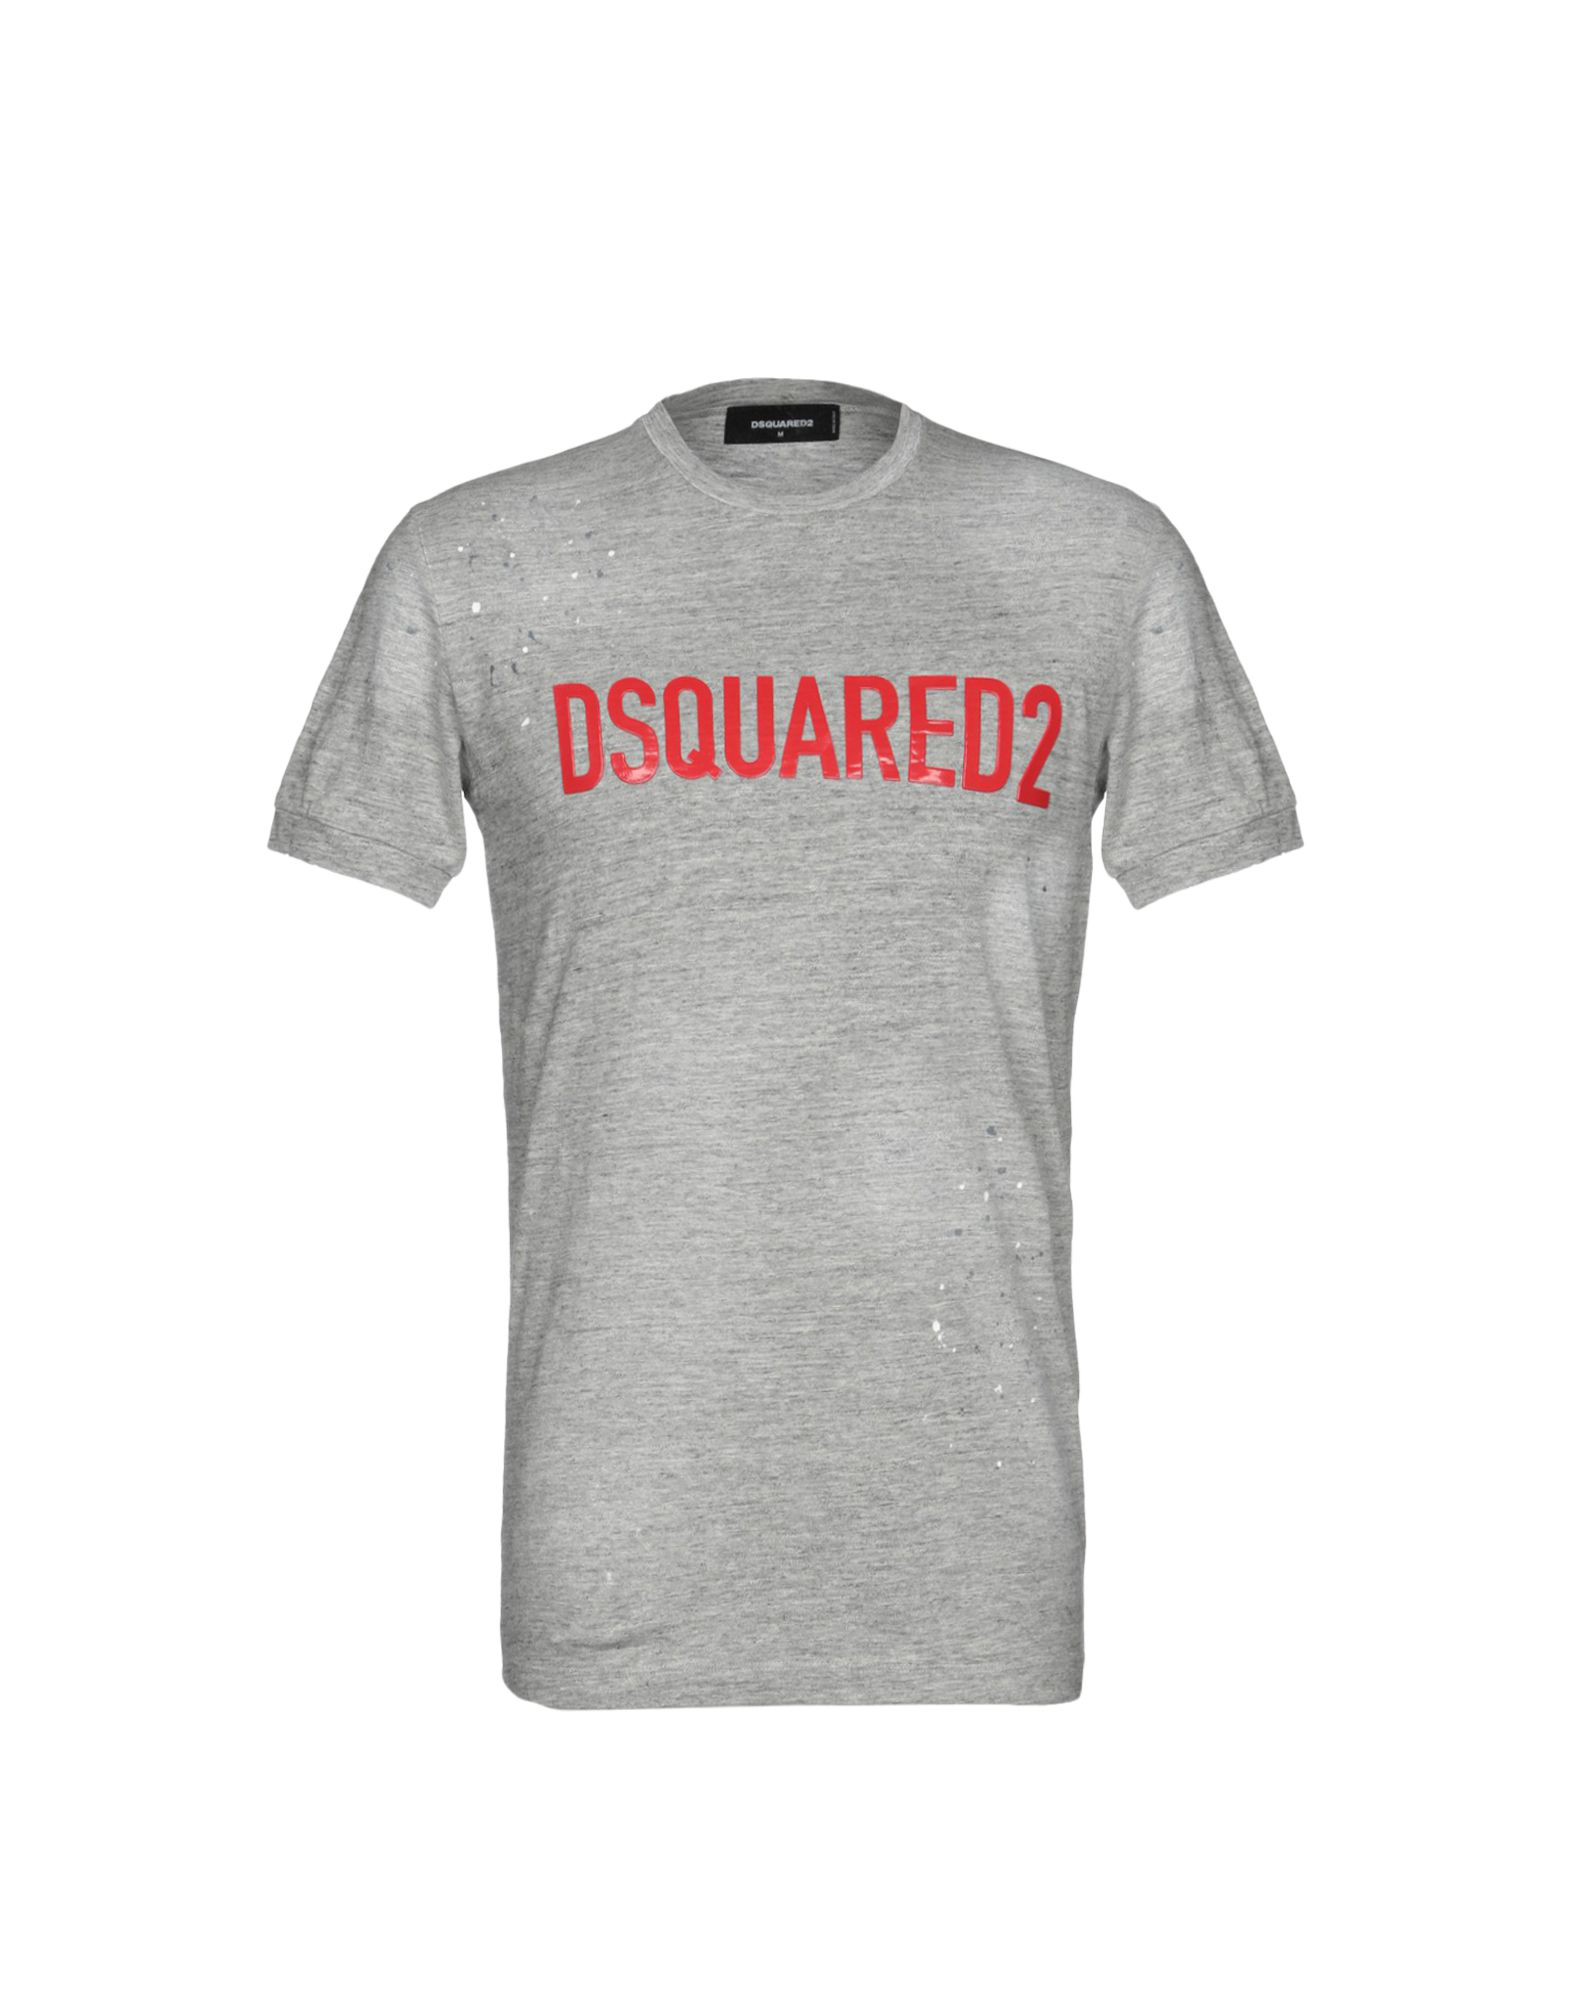 dsquared2 t shirt 2019